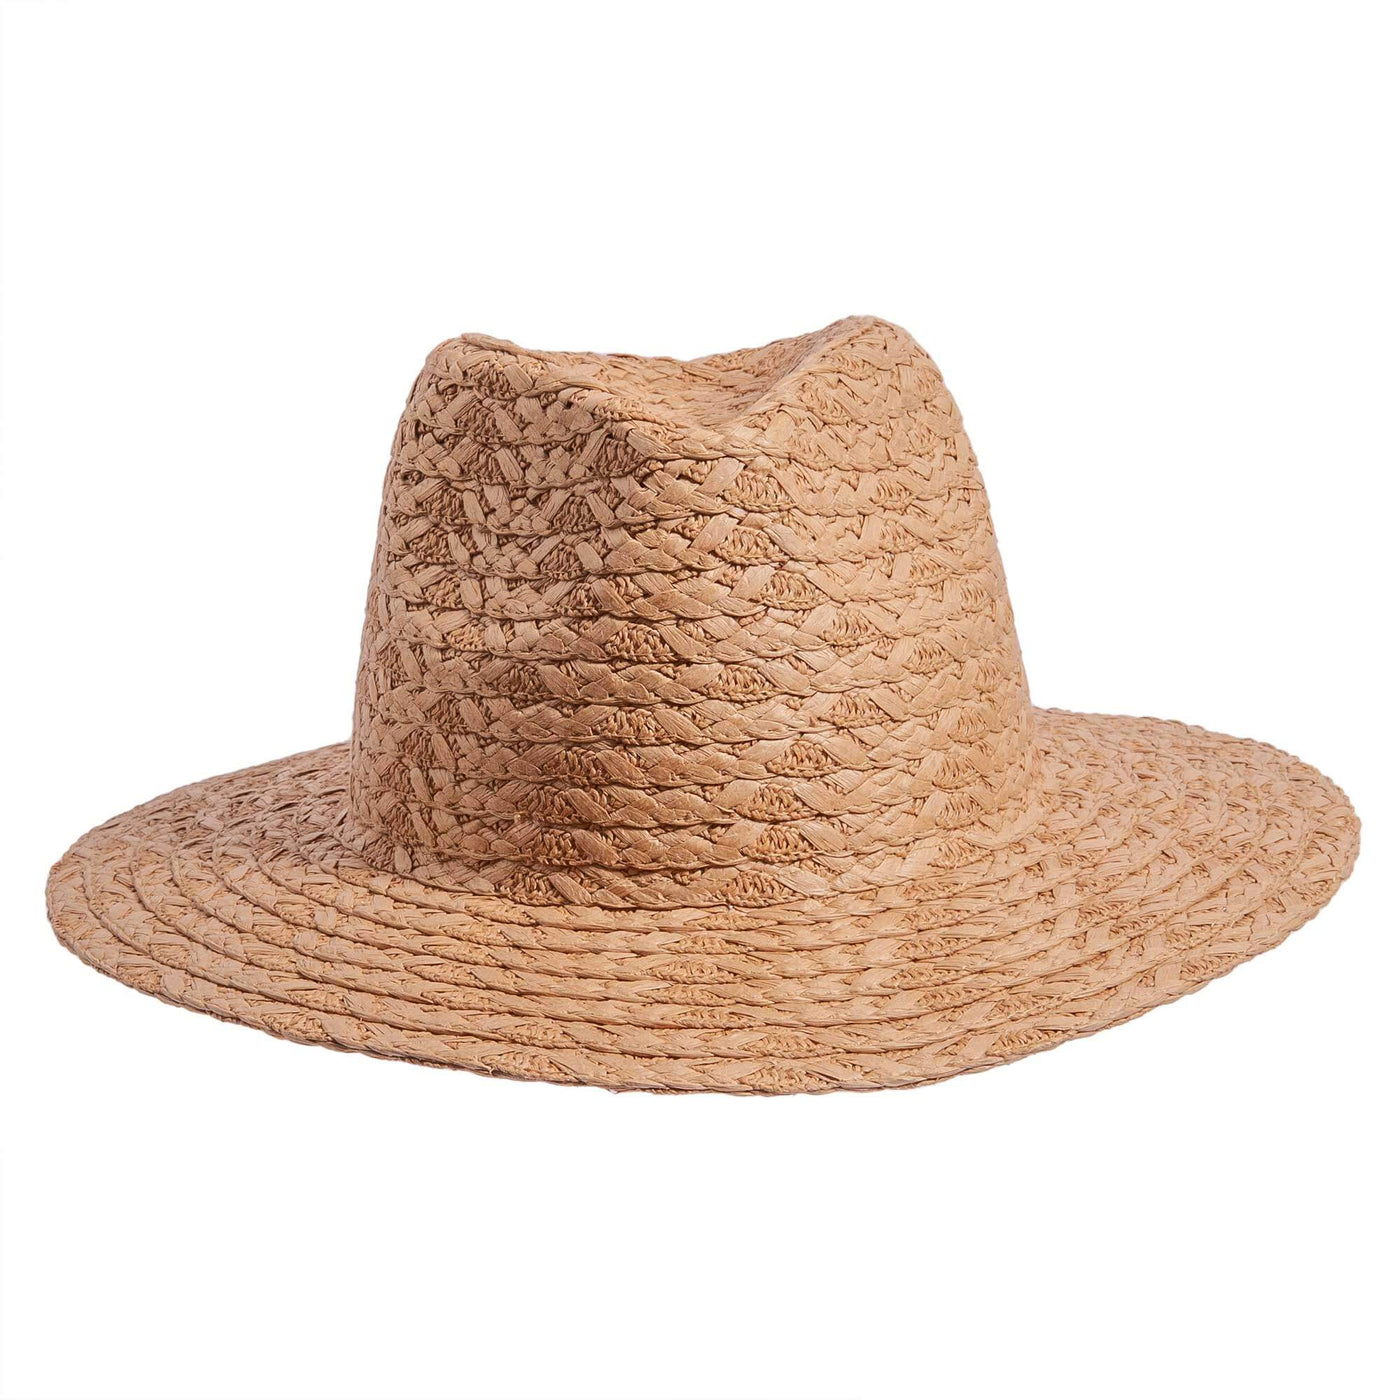 American Hat Makers Fabian - Straw Sun Hat - Simple Good